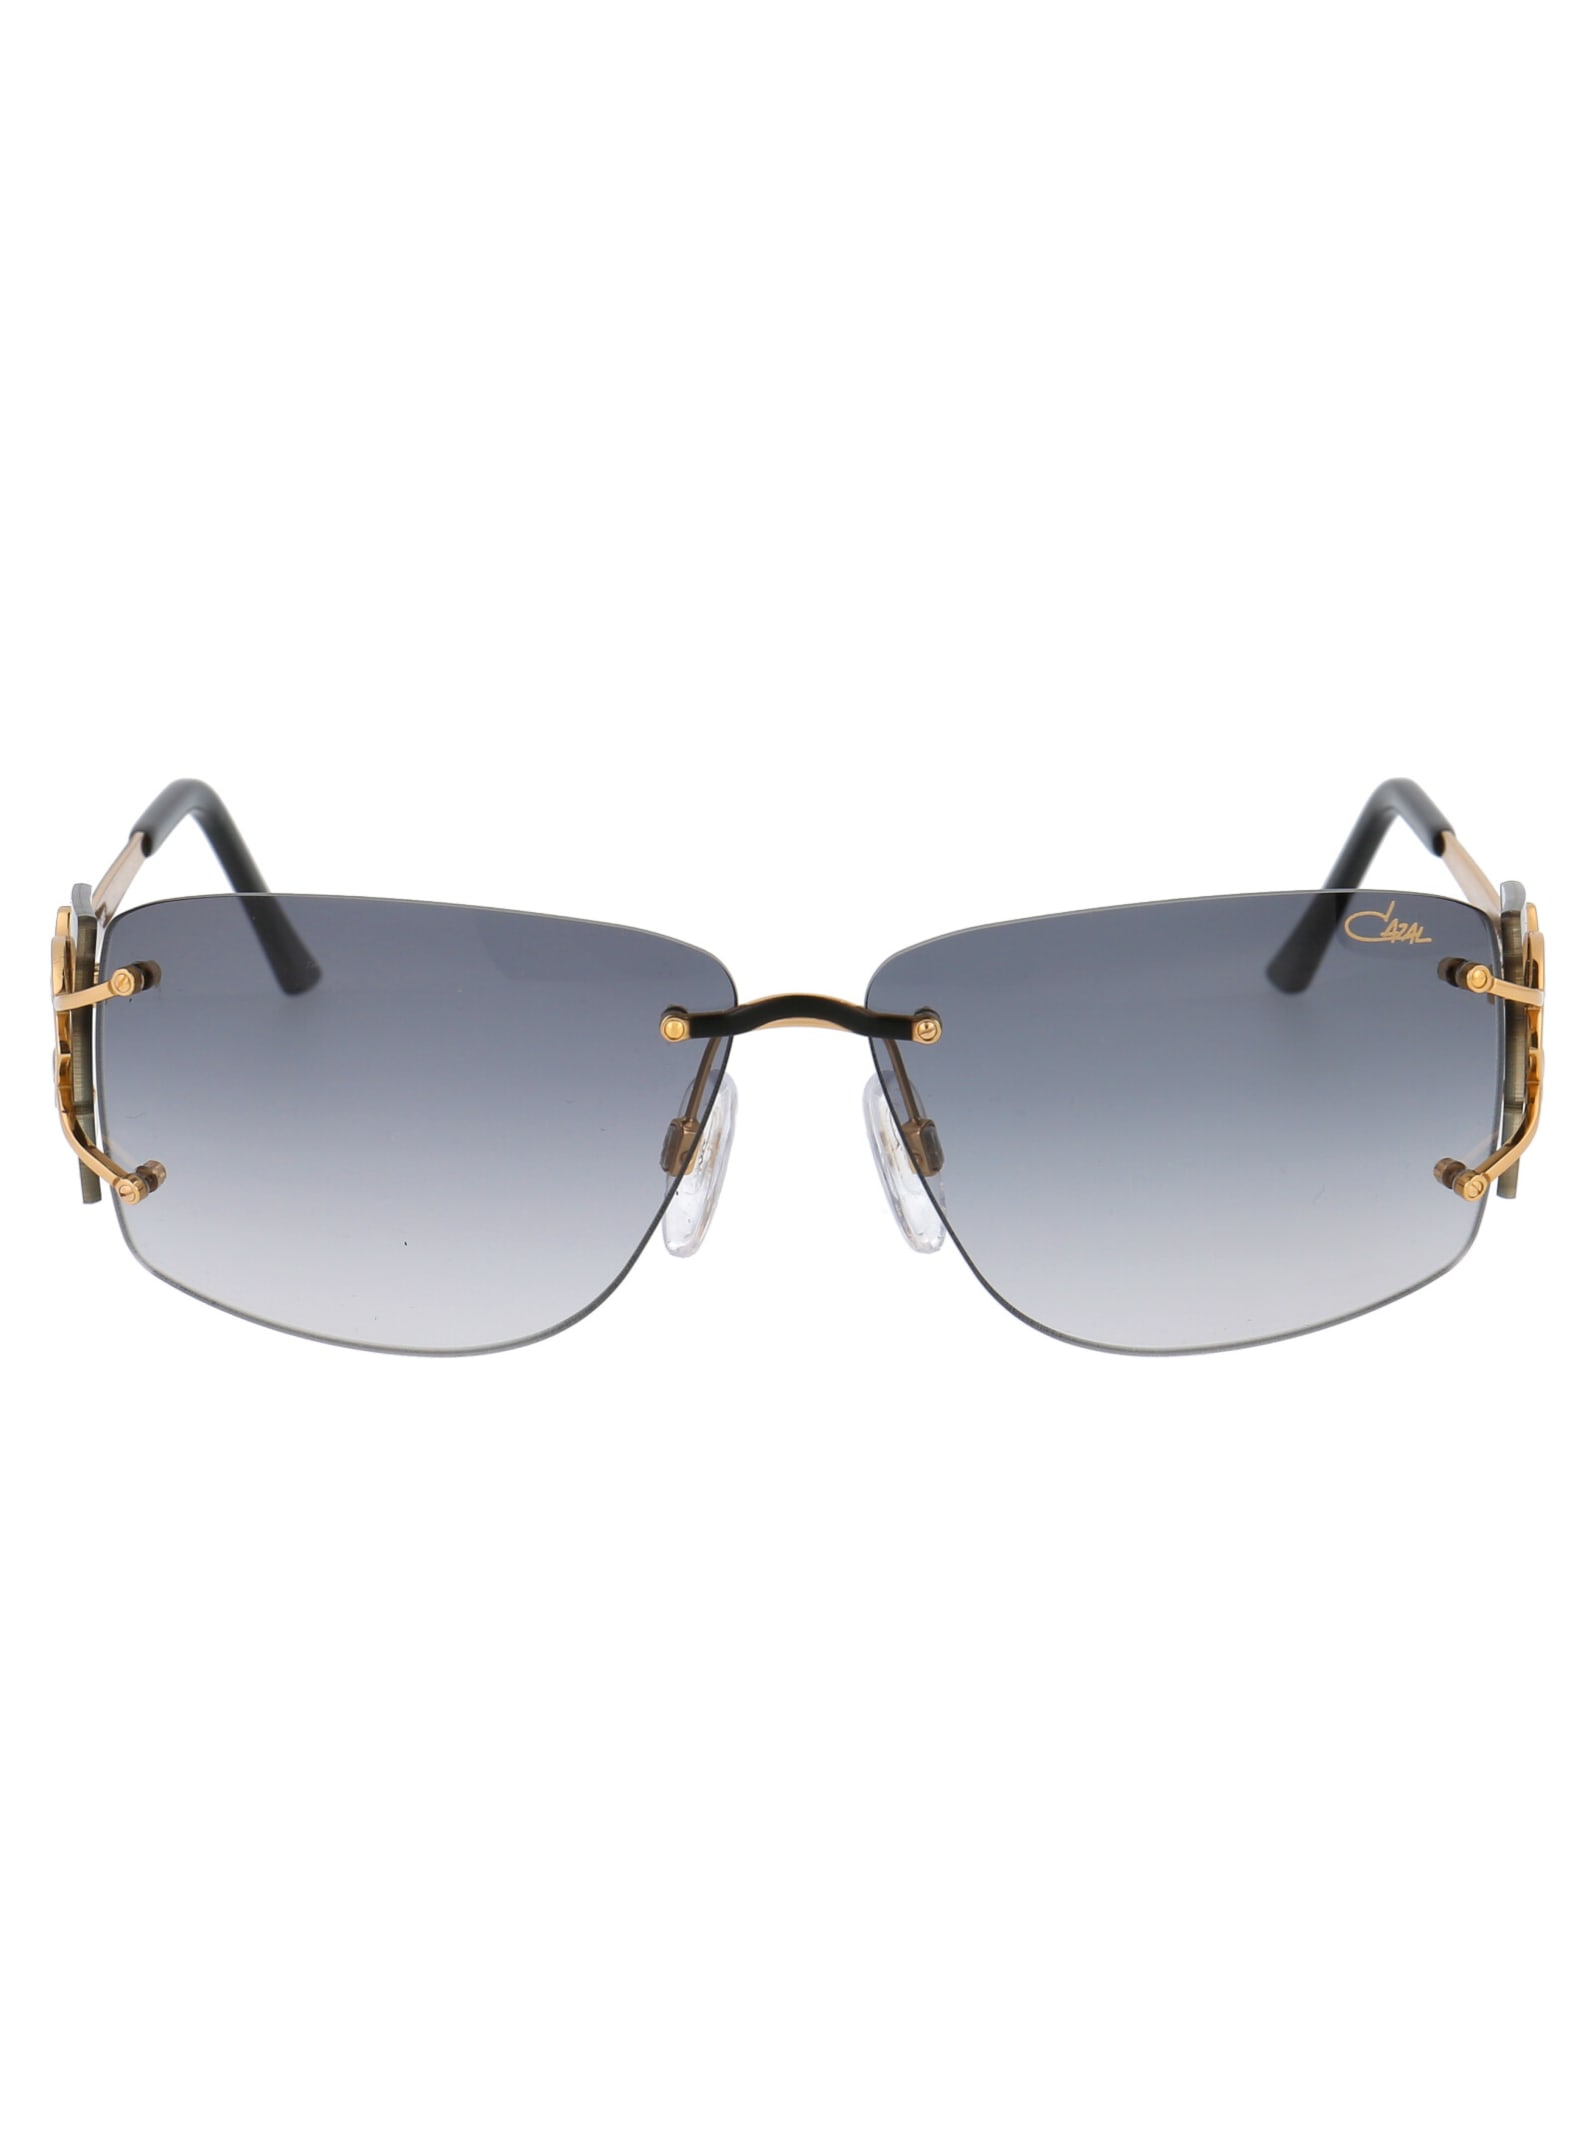 Cazal Mod. 9095 Sunglasses In 001 Gold | ModeSens